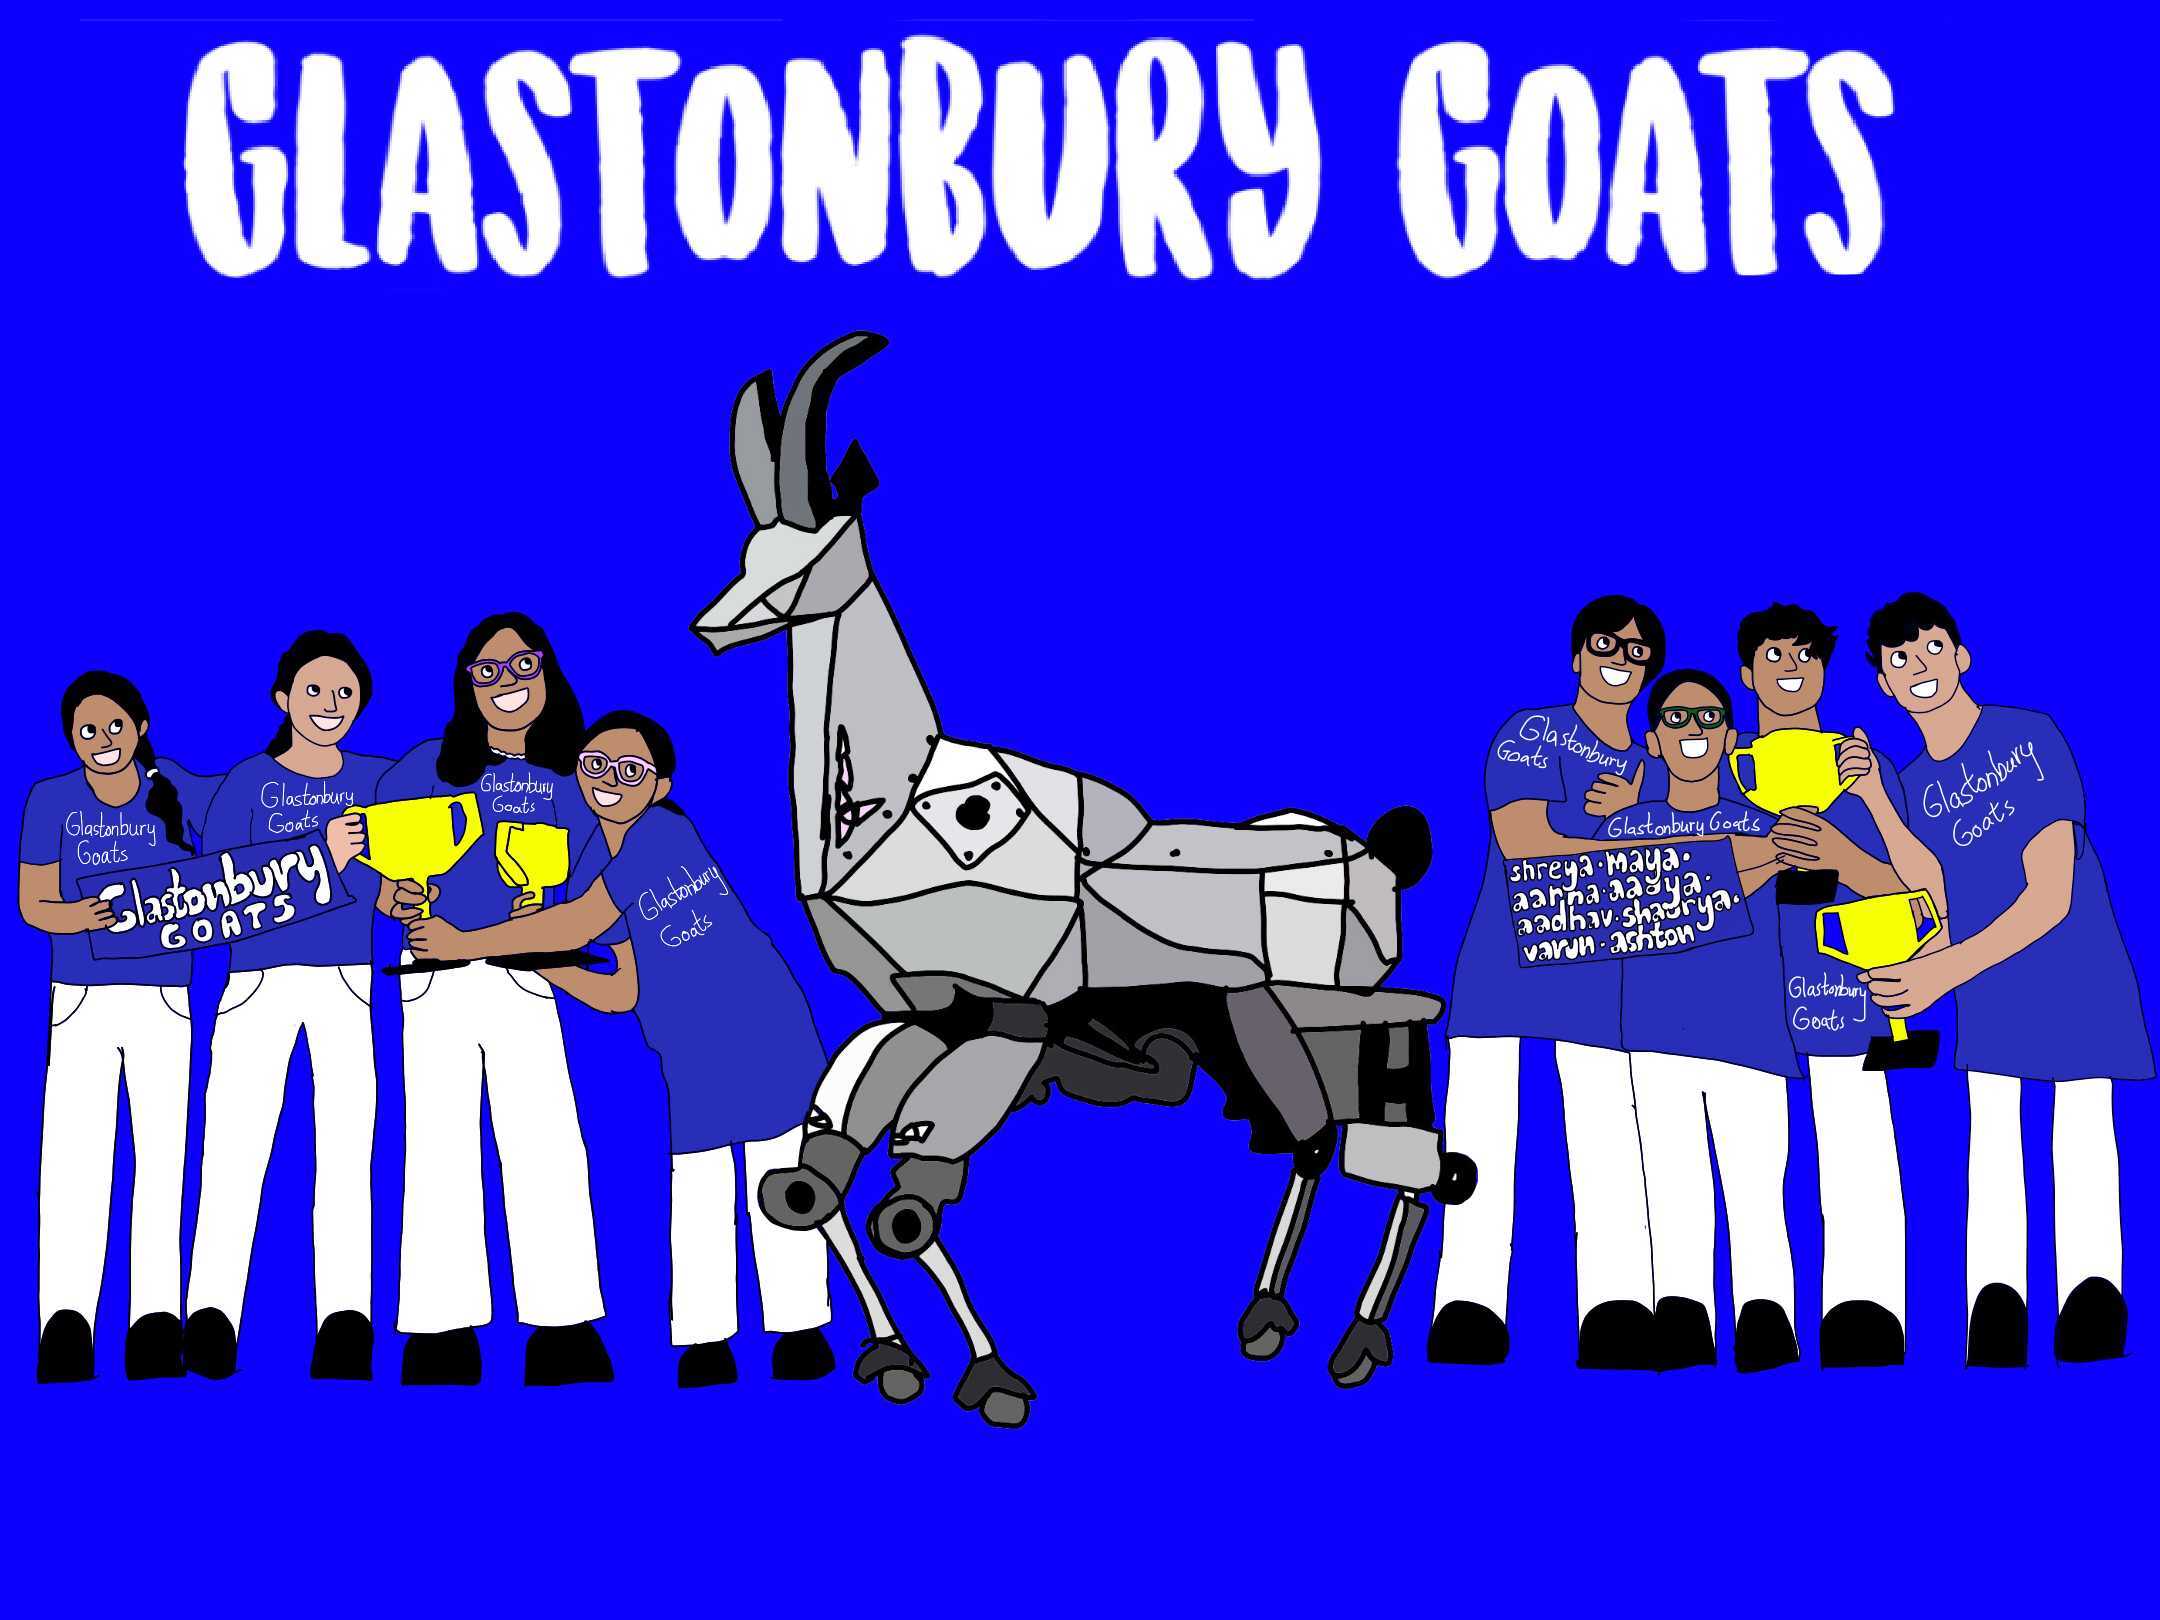 Glastonbury Goats